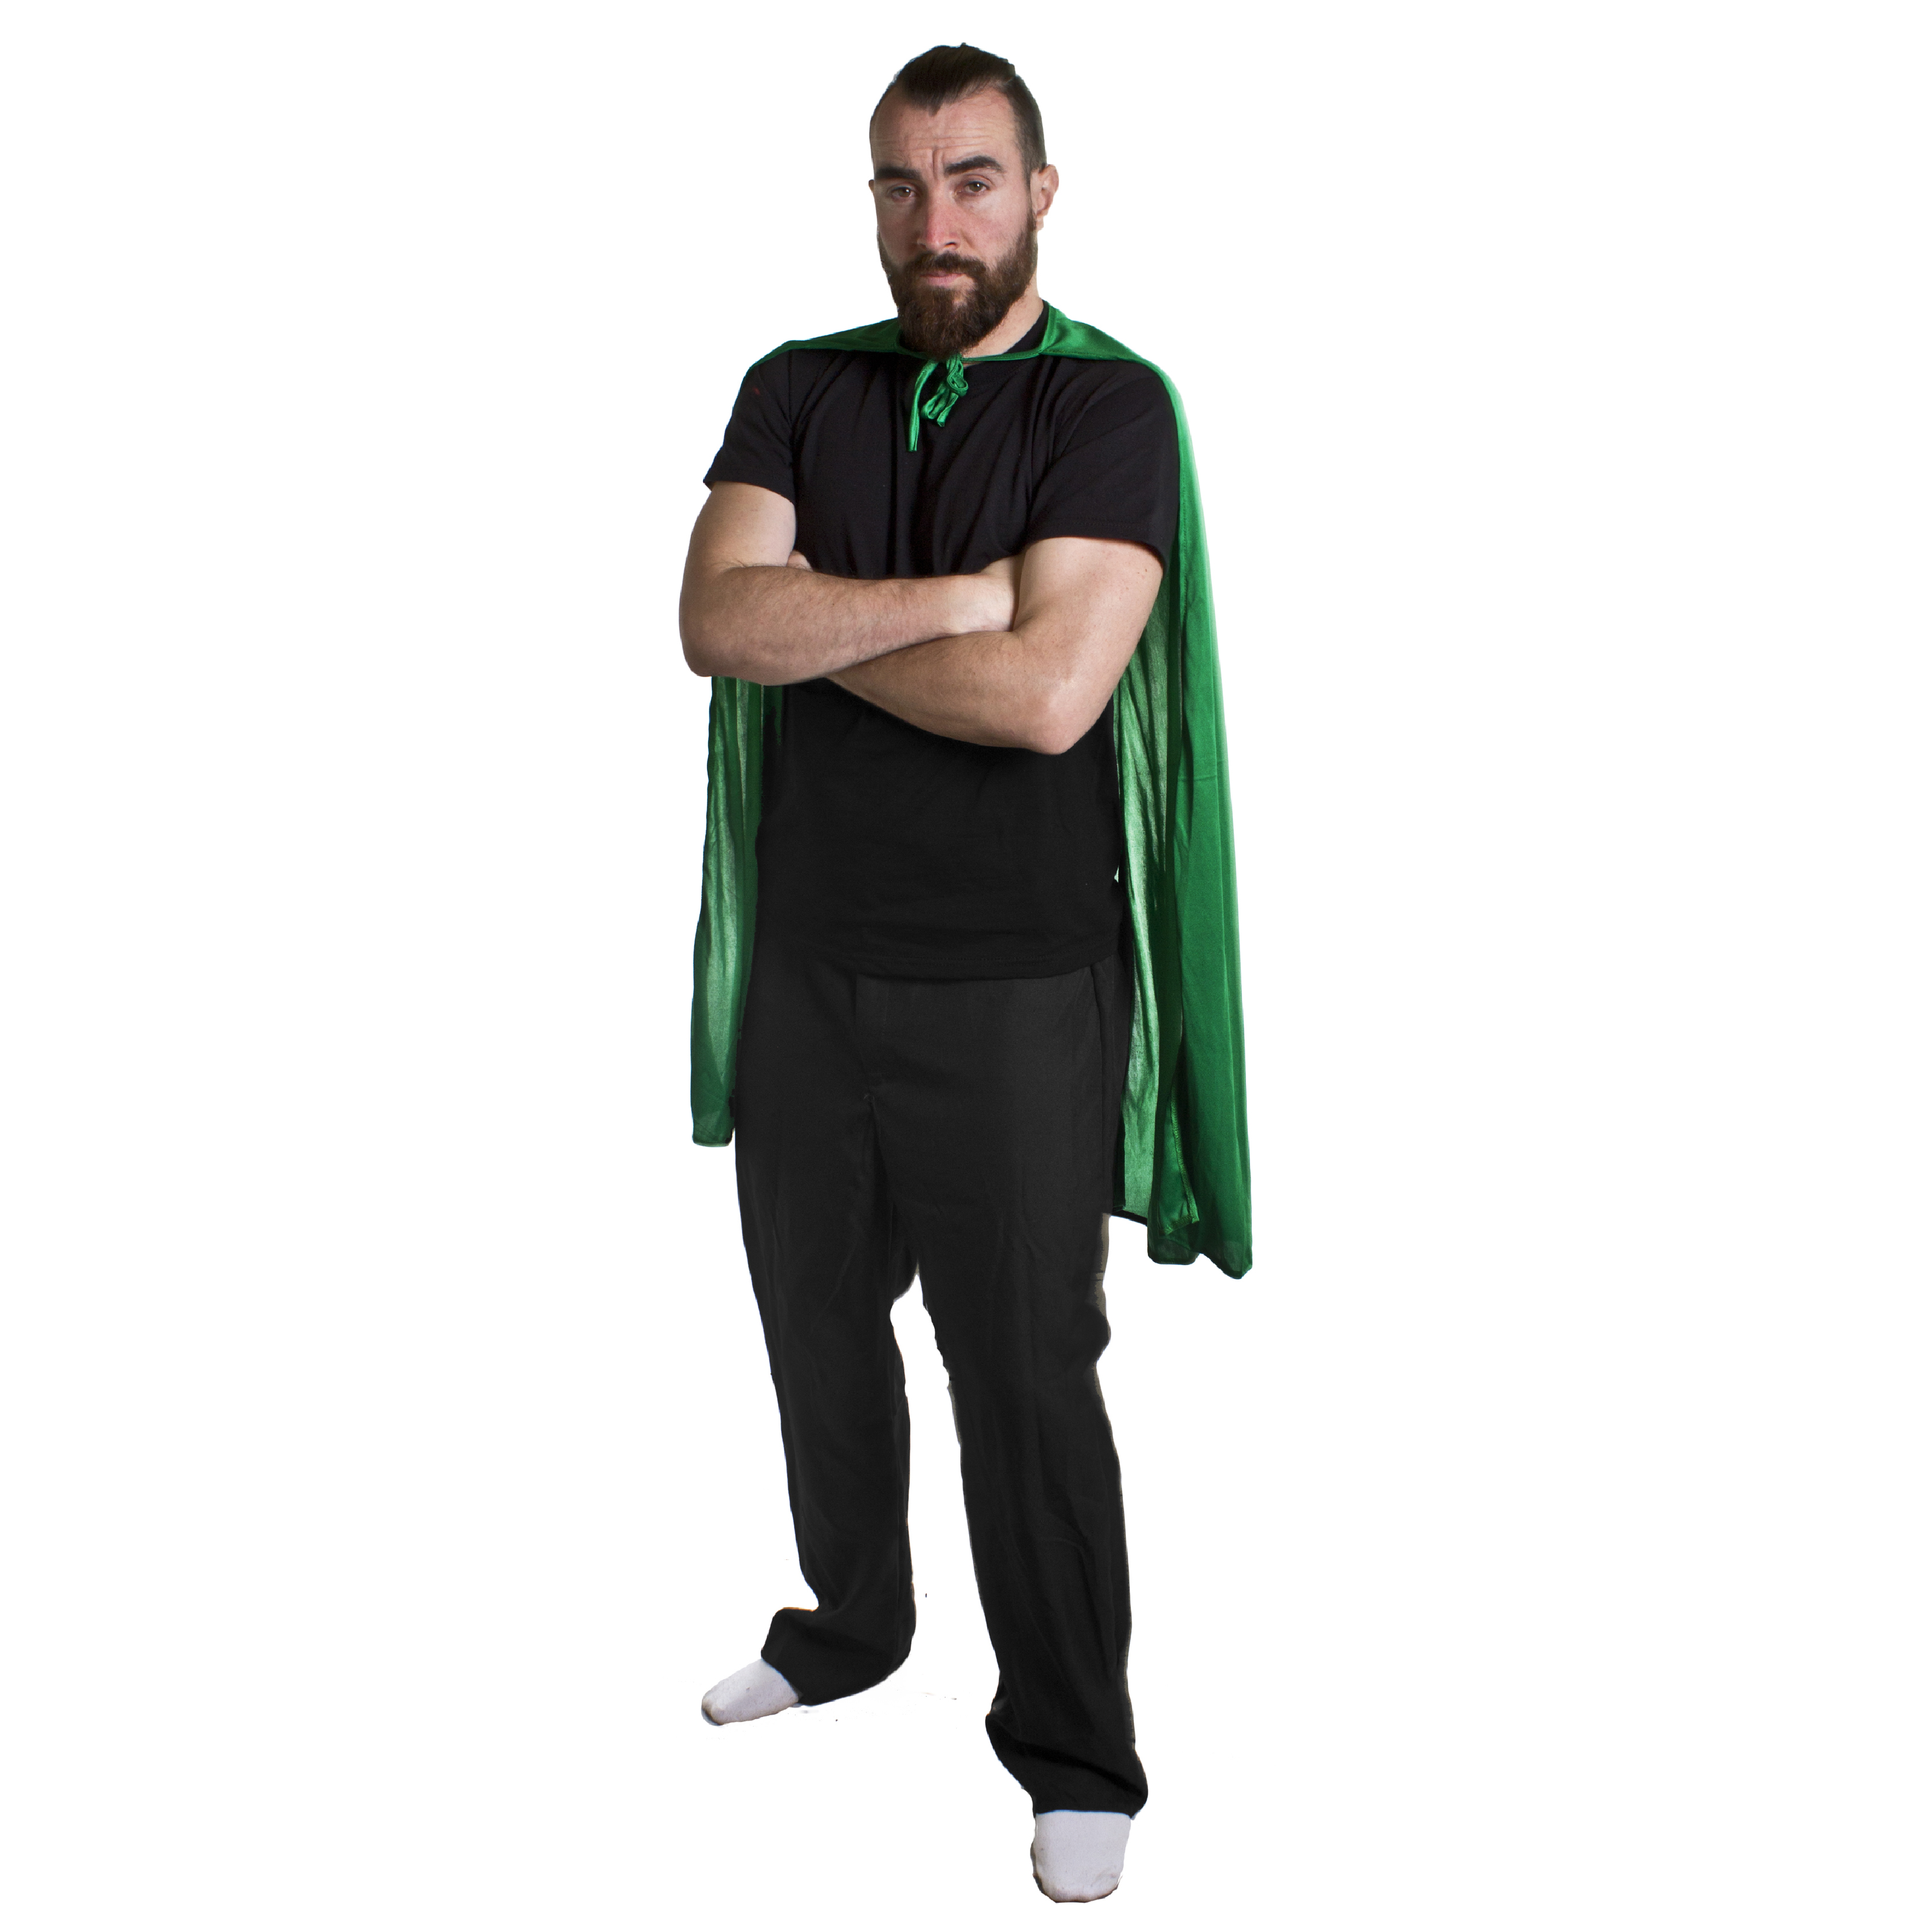 Green Superhero Cape - I Love Fancy Dress